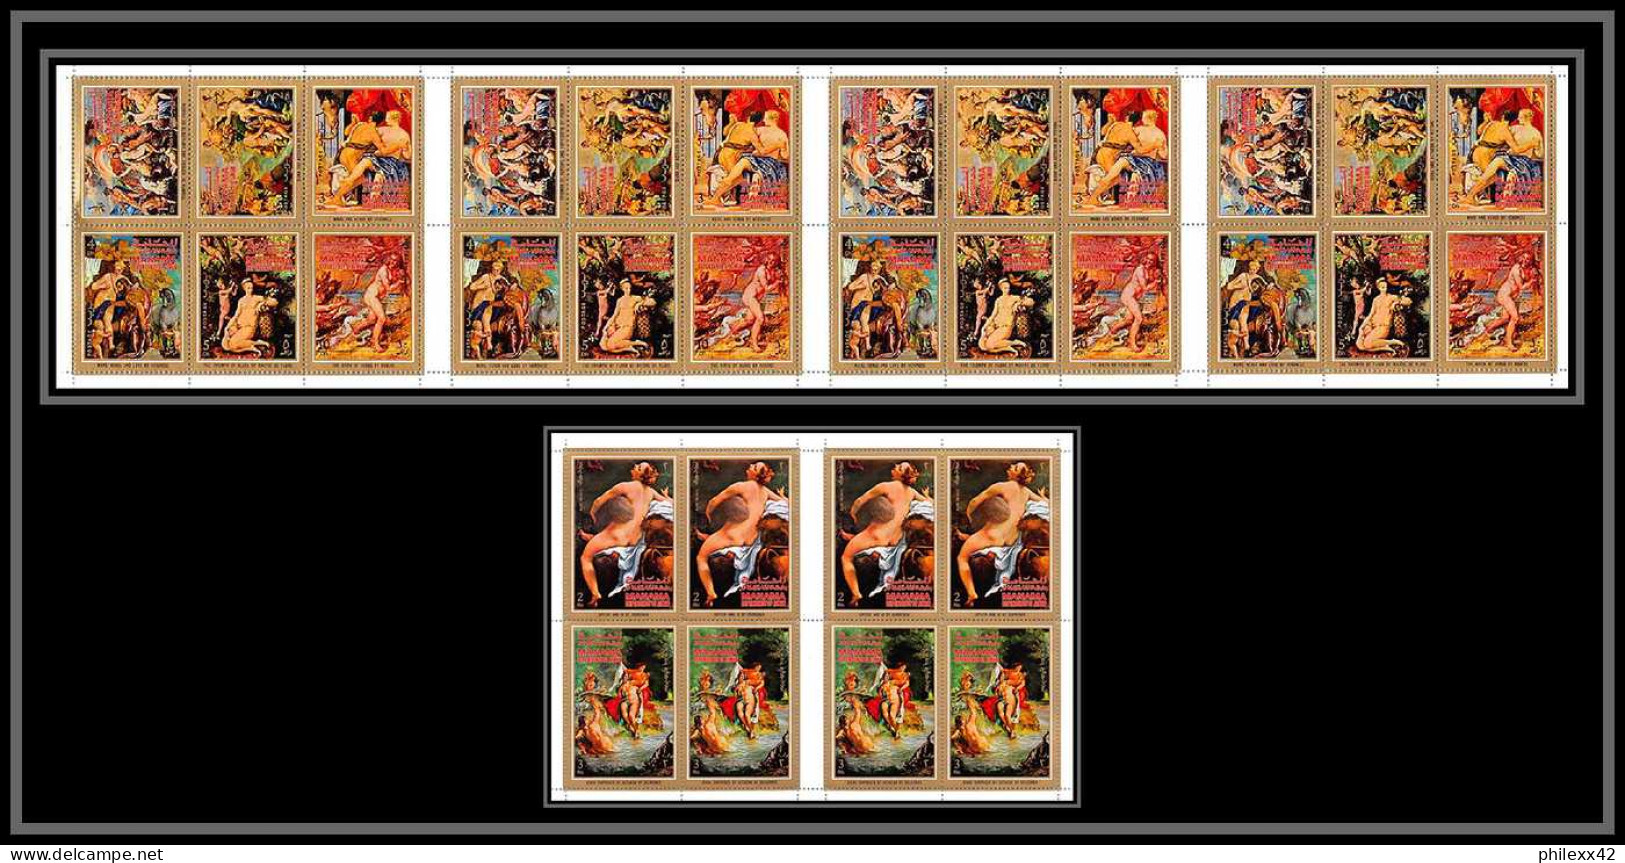 Manama - 3412c/ N°664/671 A Moman Mythology Paintings Nus Nudes Tableau Painting Neuf ** MNH Feuille Sheet RR Rubens - Desnudos